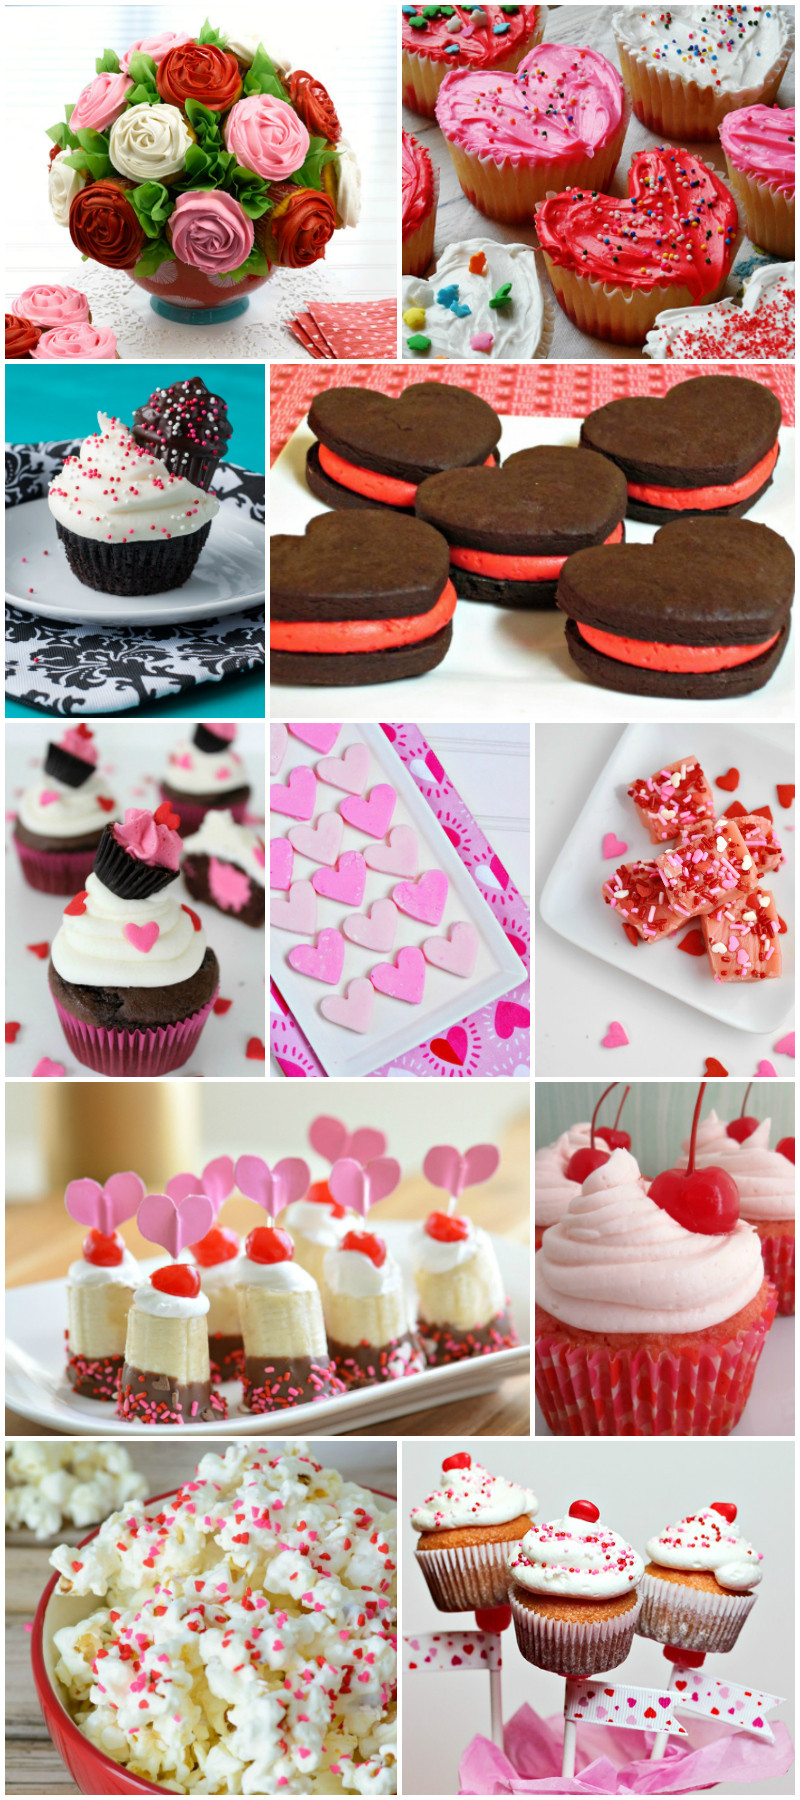 Valentine'S Day Dessert Ideas
 50 Cute and Delicious Valentine’s Day Dessert Recipes